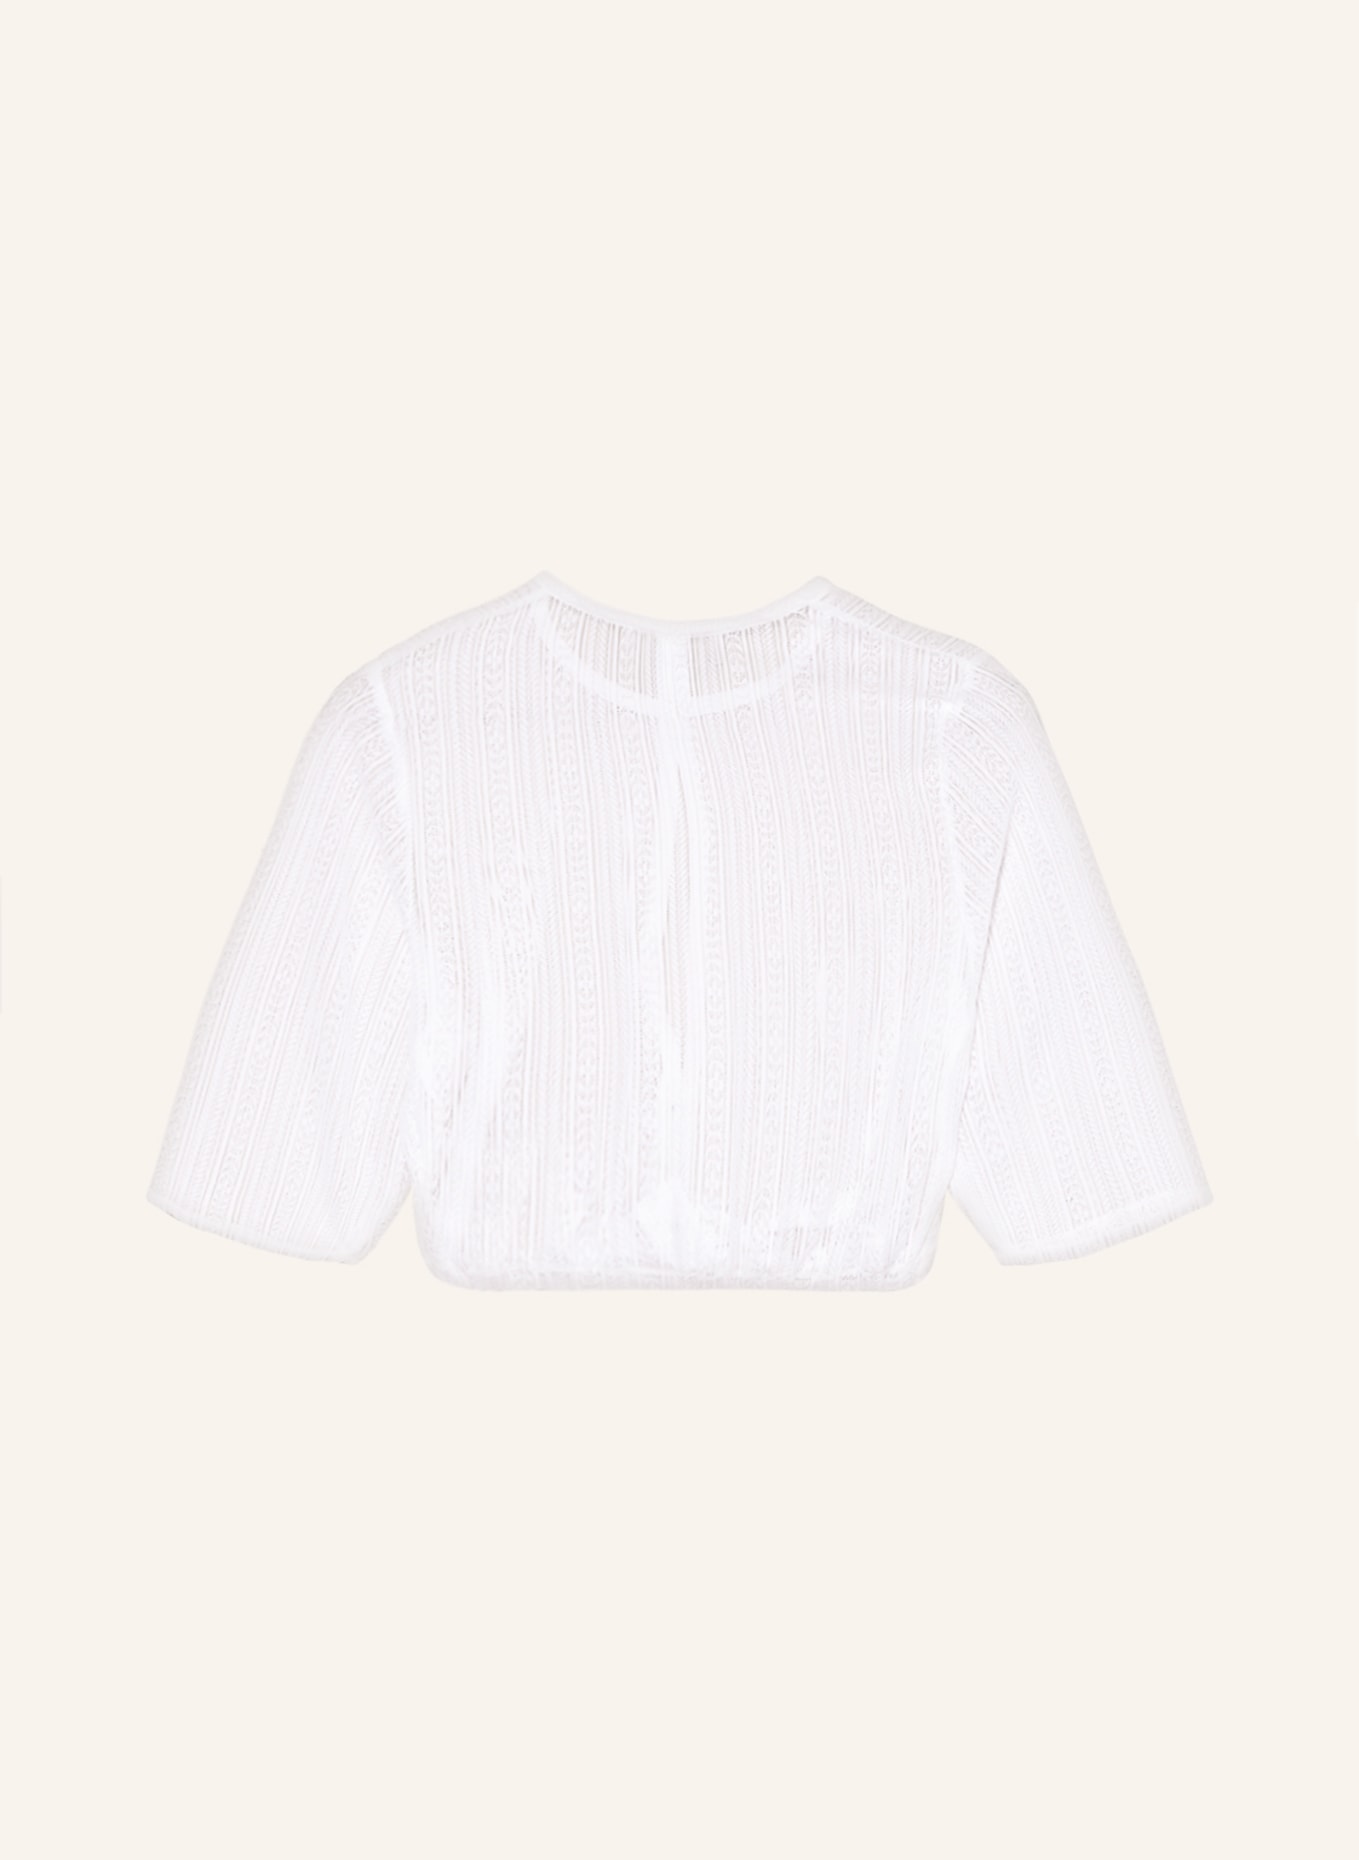 Hammerschmid Dirndl blouse made of lace, Color: WHITE (Image 2)